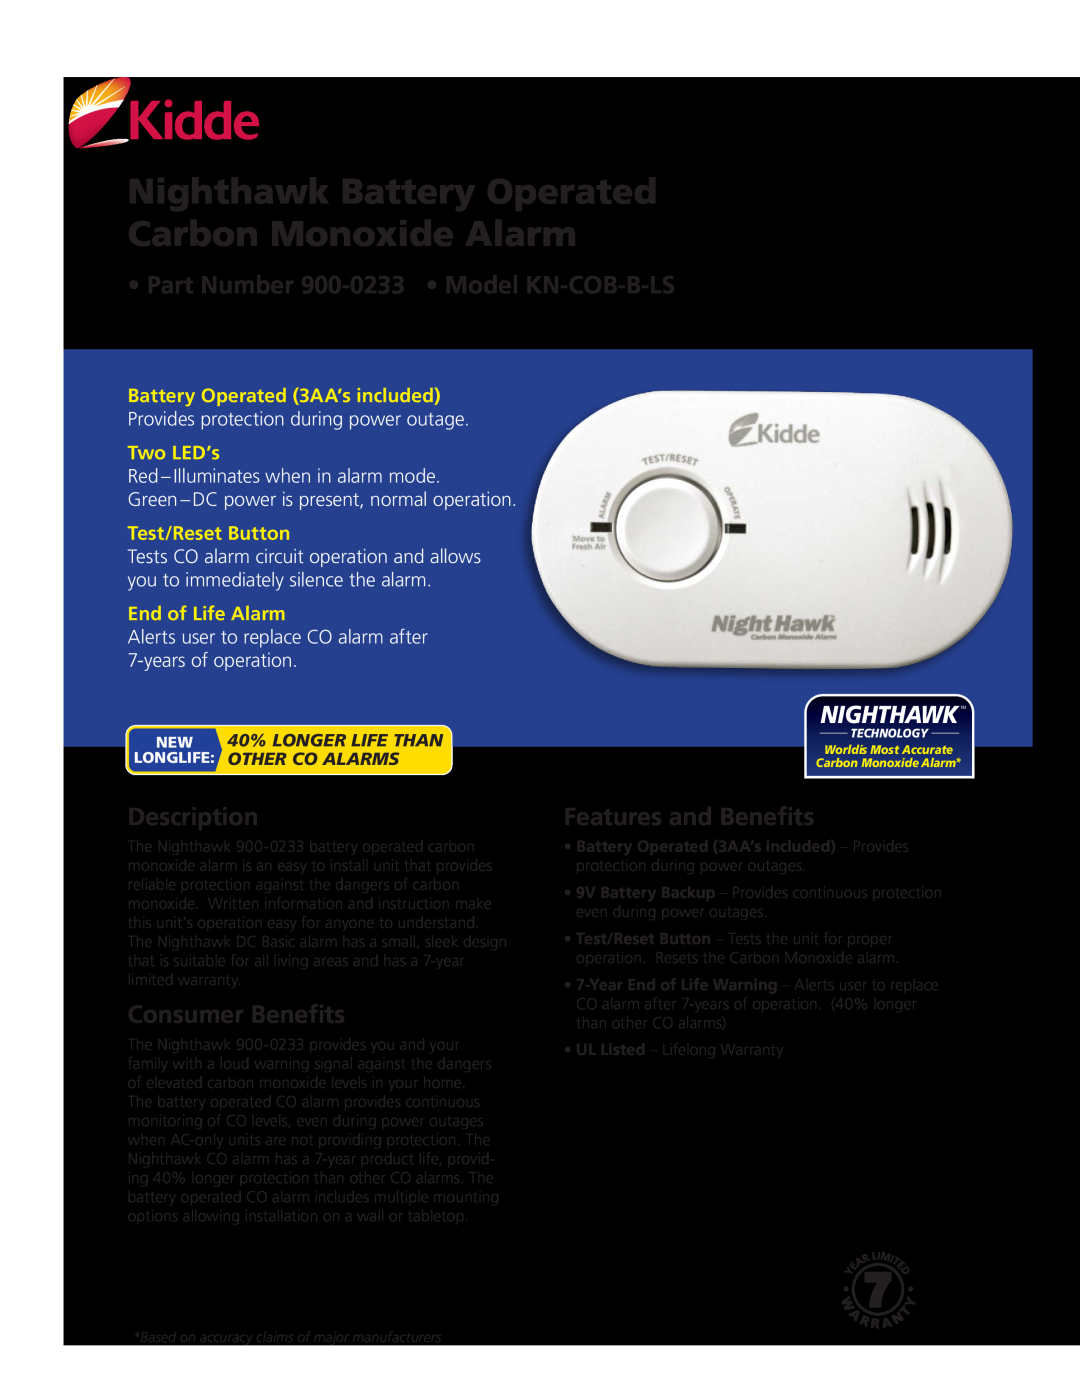 Kidde warranty Part Number 900-0233 Model KN-COB-B-LS, Description, Consumer Benefits, Nighthawktm, Two LED’s, Listed 